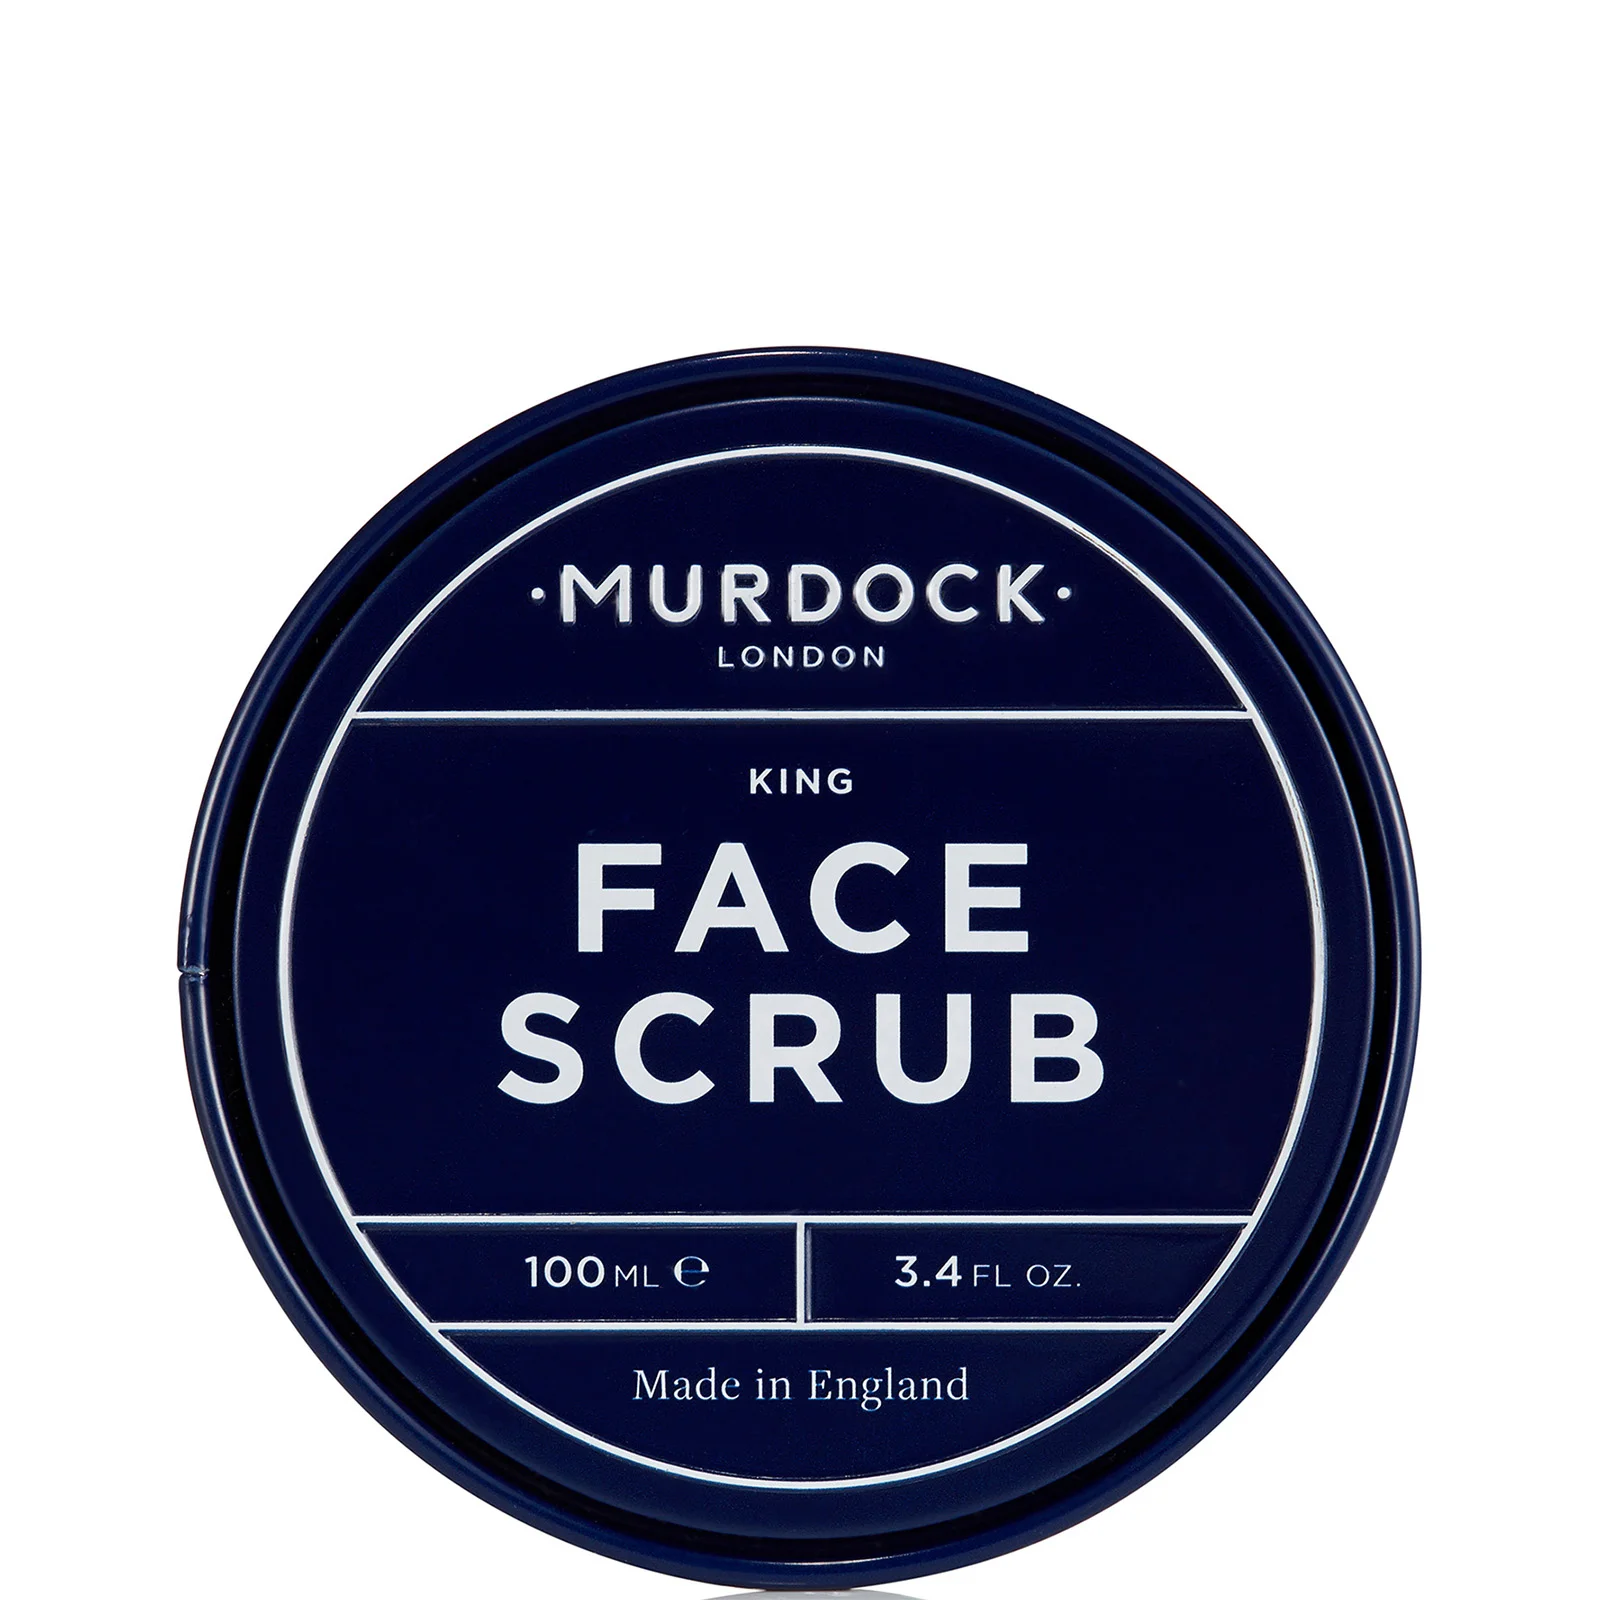 Murdock London Face Scrub 100ml Image 1